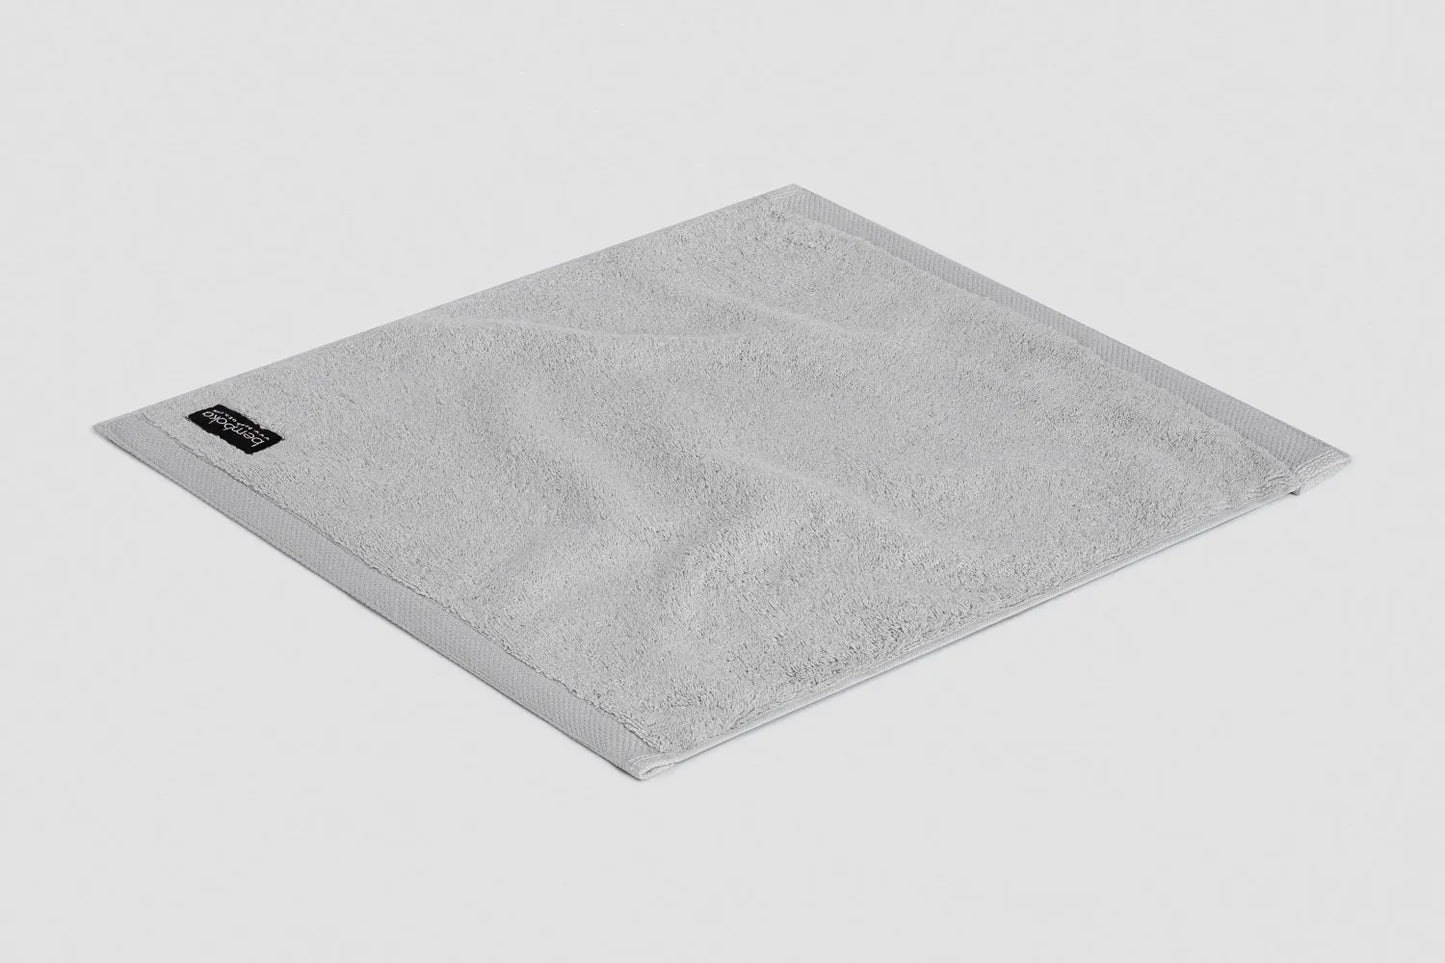 Bemboka Luxe Towel Collection